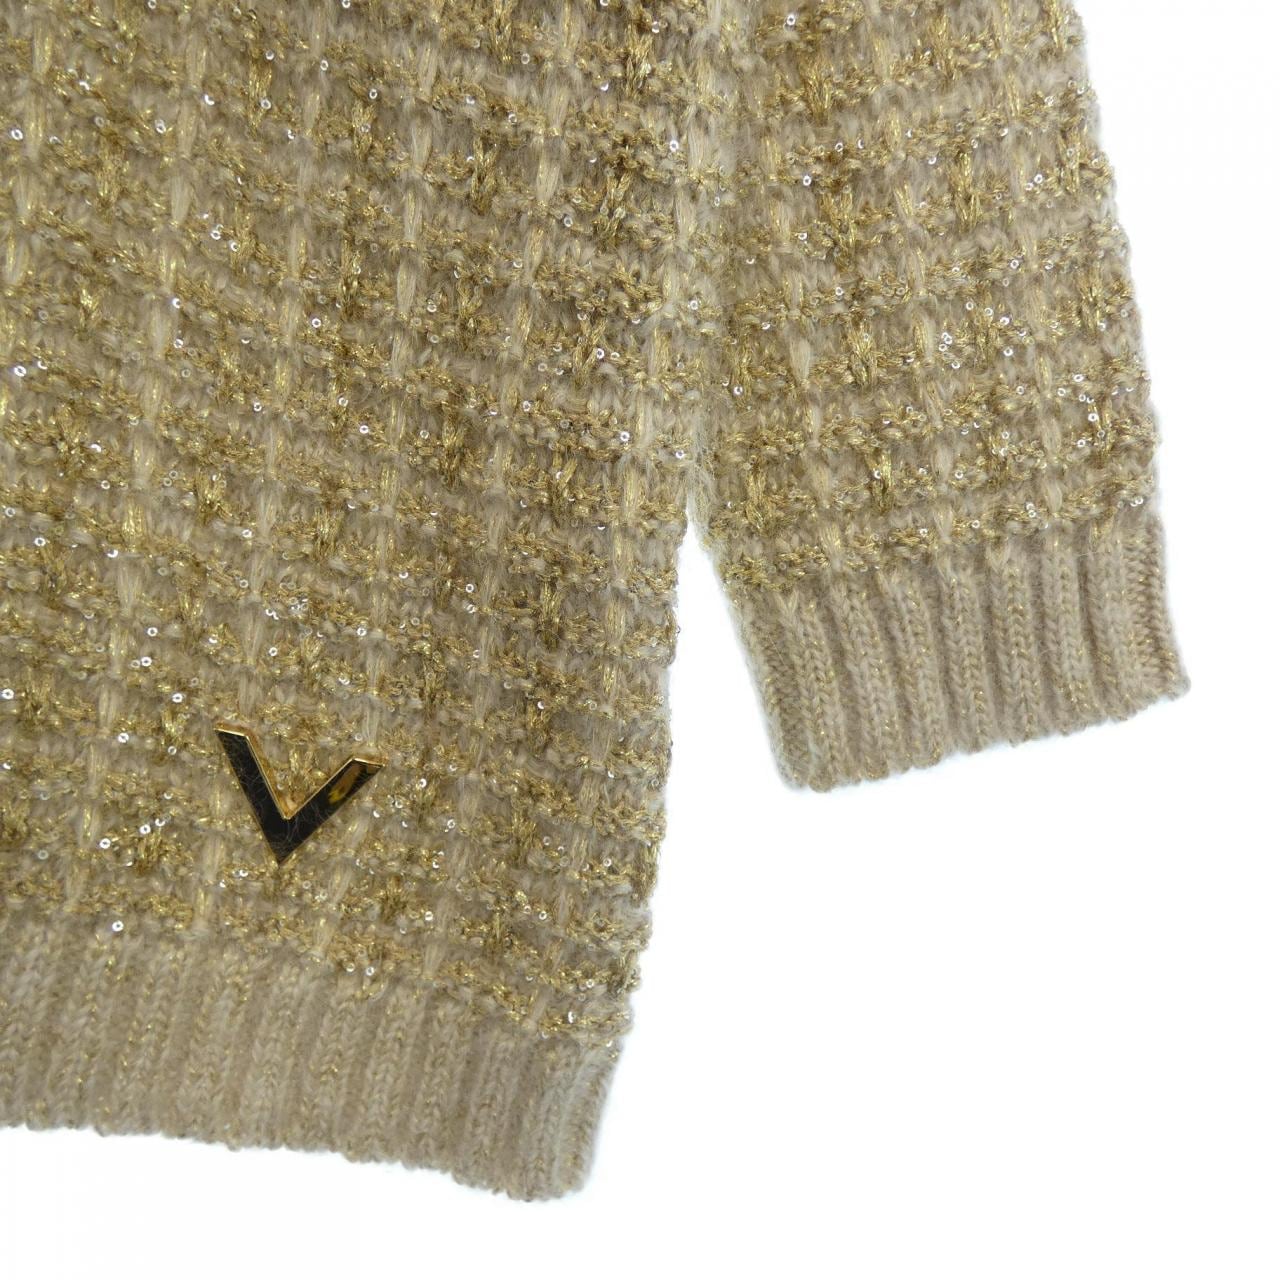 VALENTINO VALENTINO knitwear